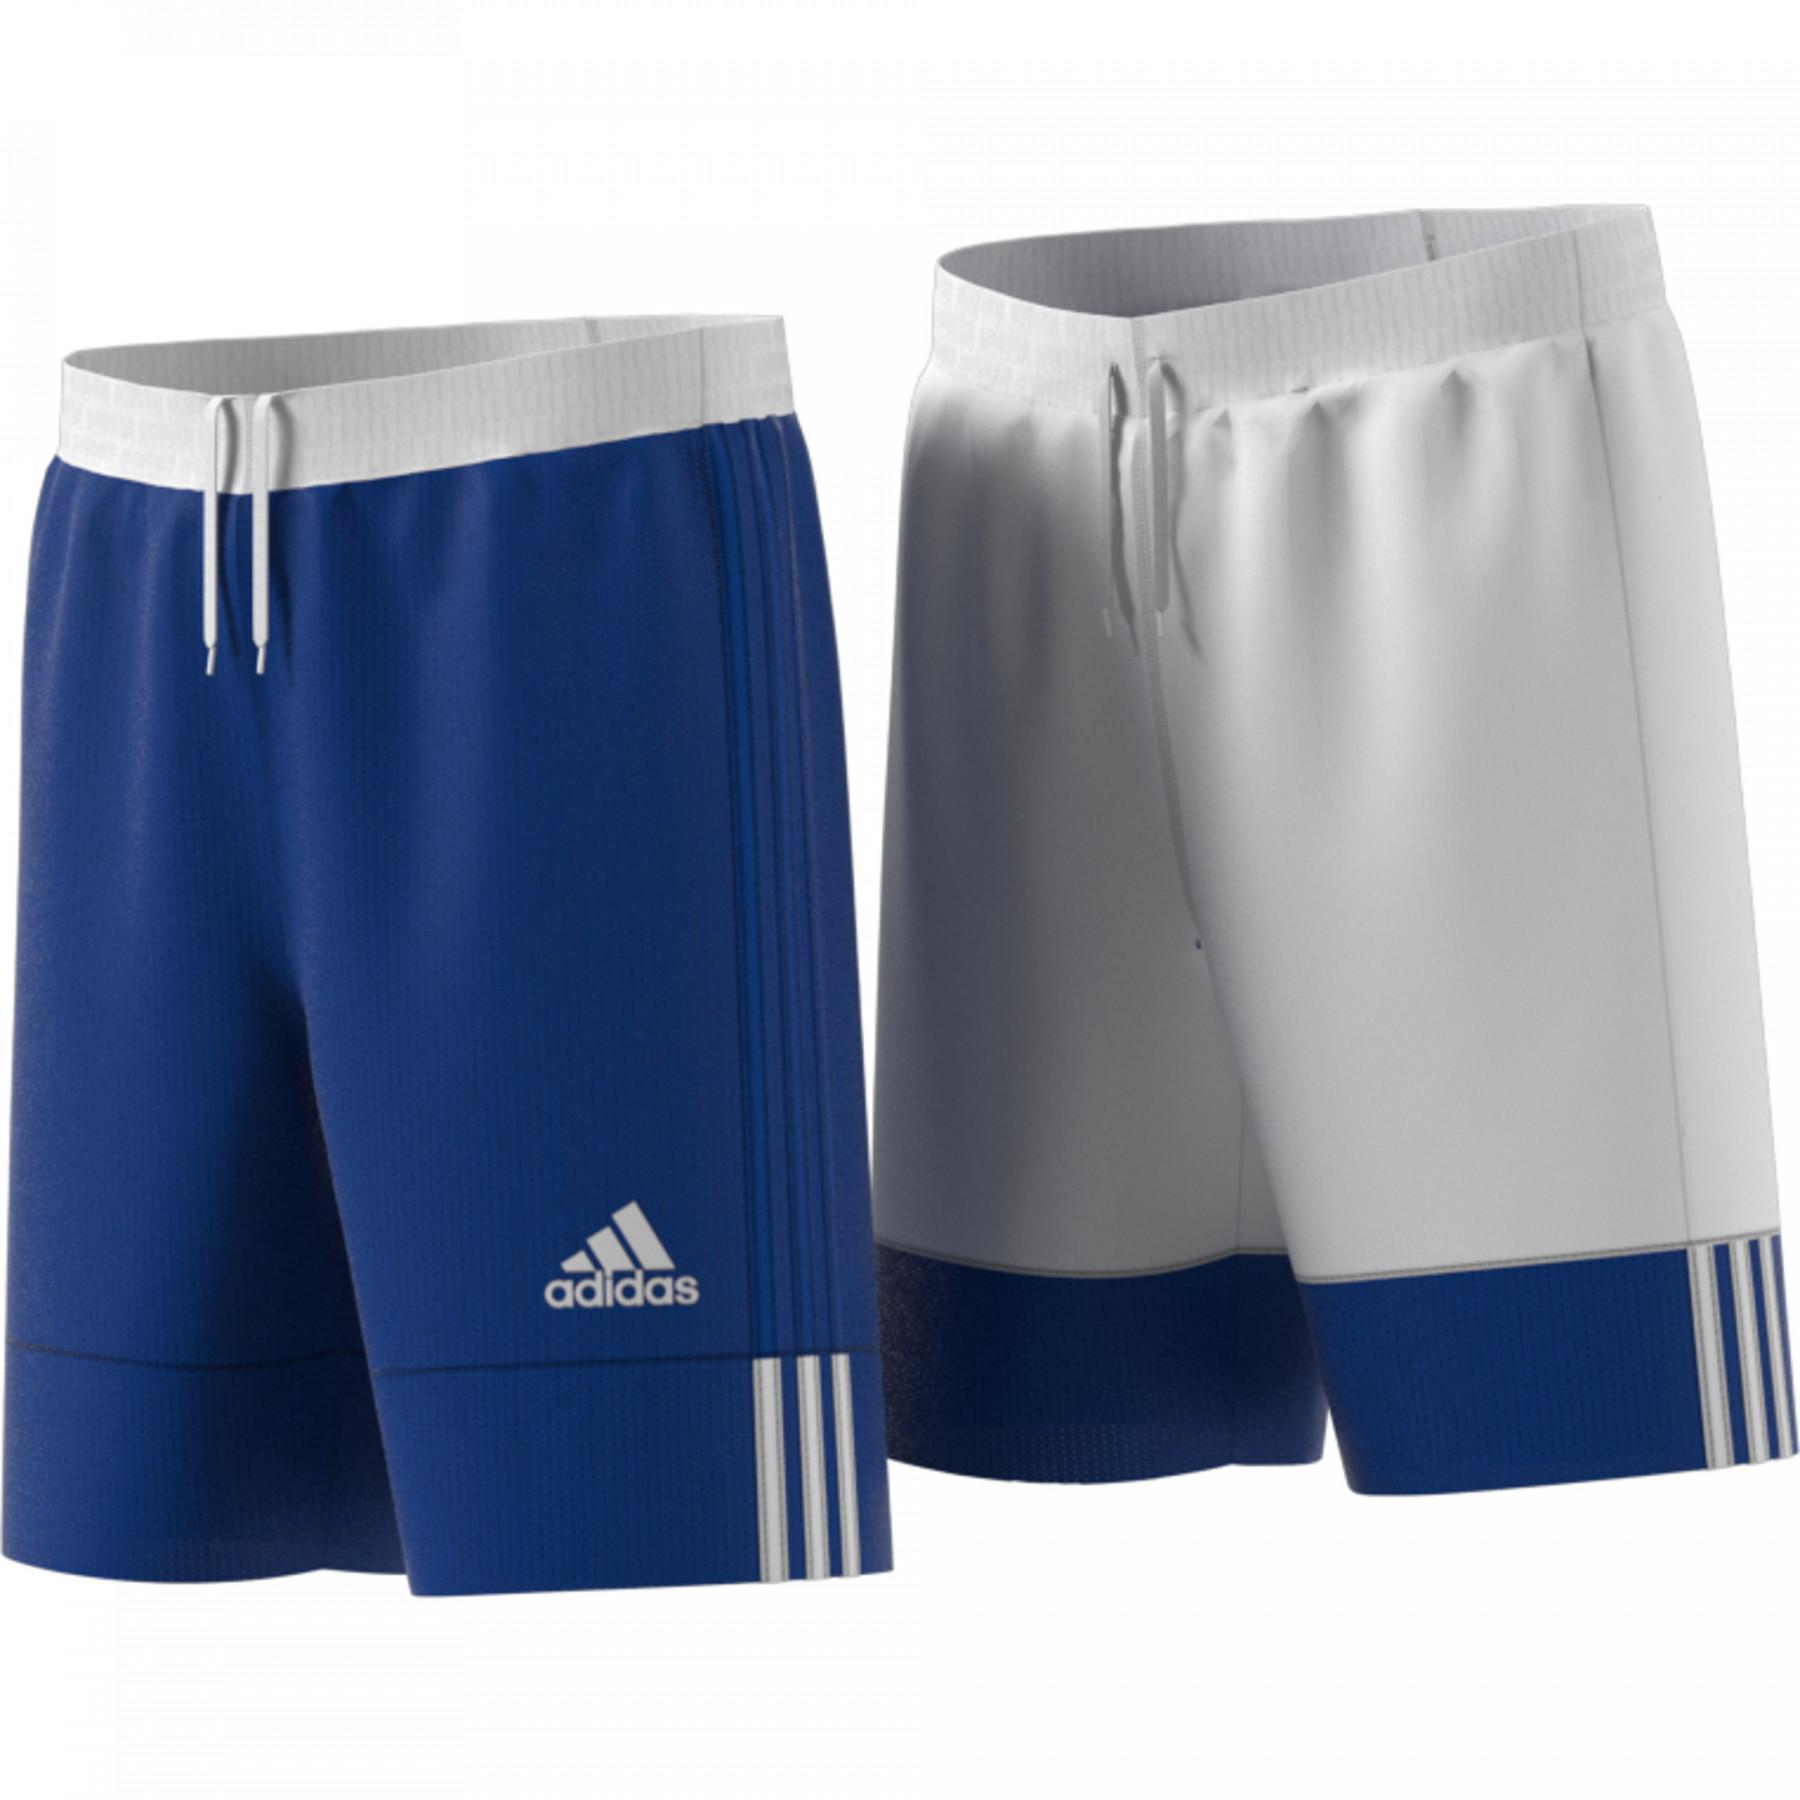 Children's shorts adidas 3G Speed Reversible - Shorts - Men's wear -  Basketball wear